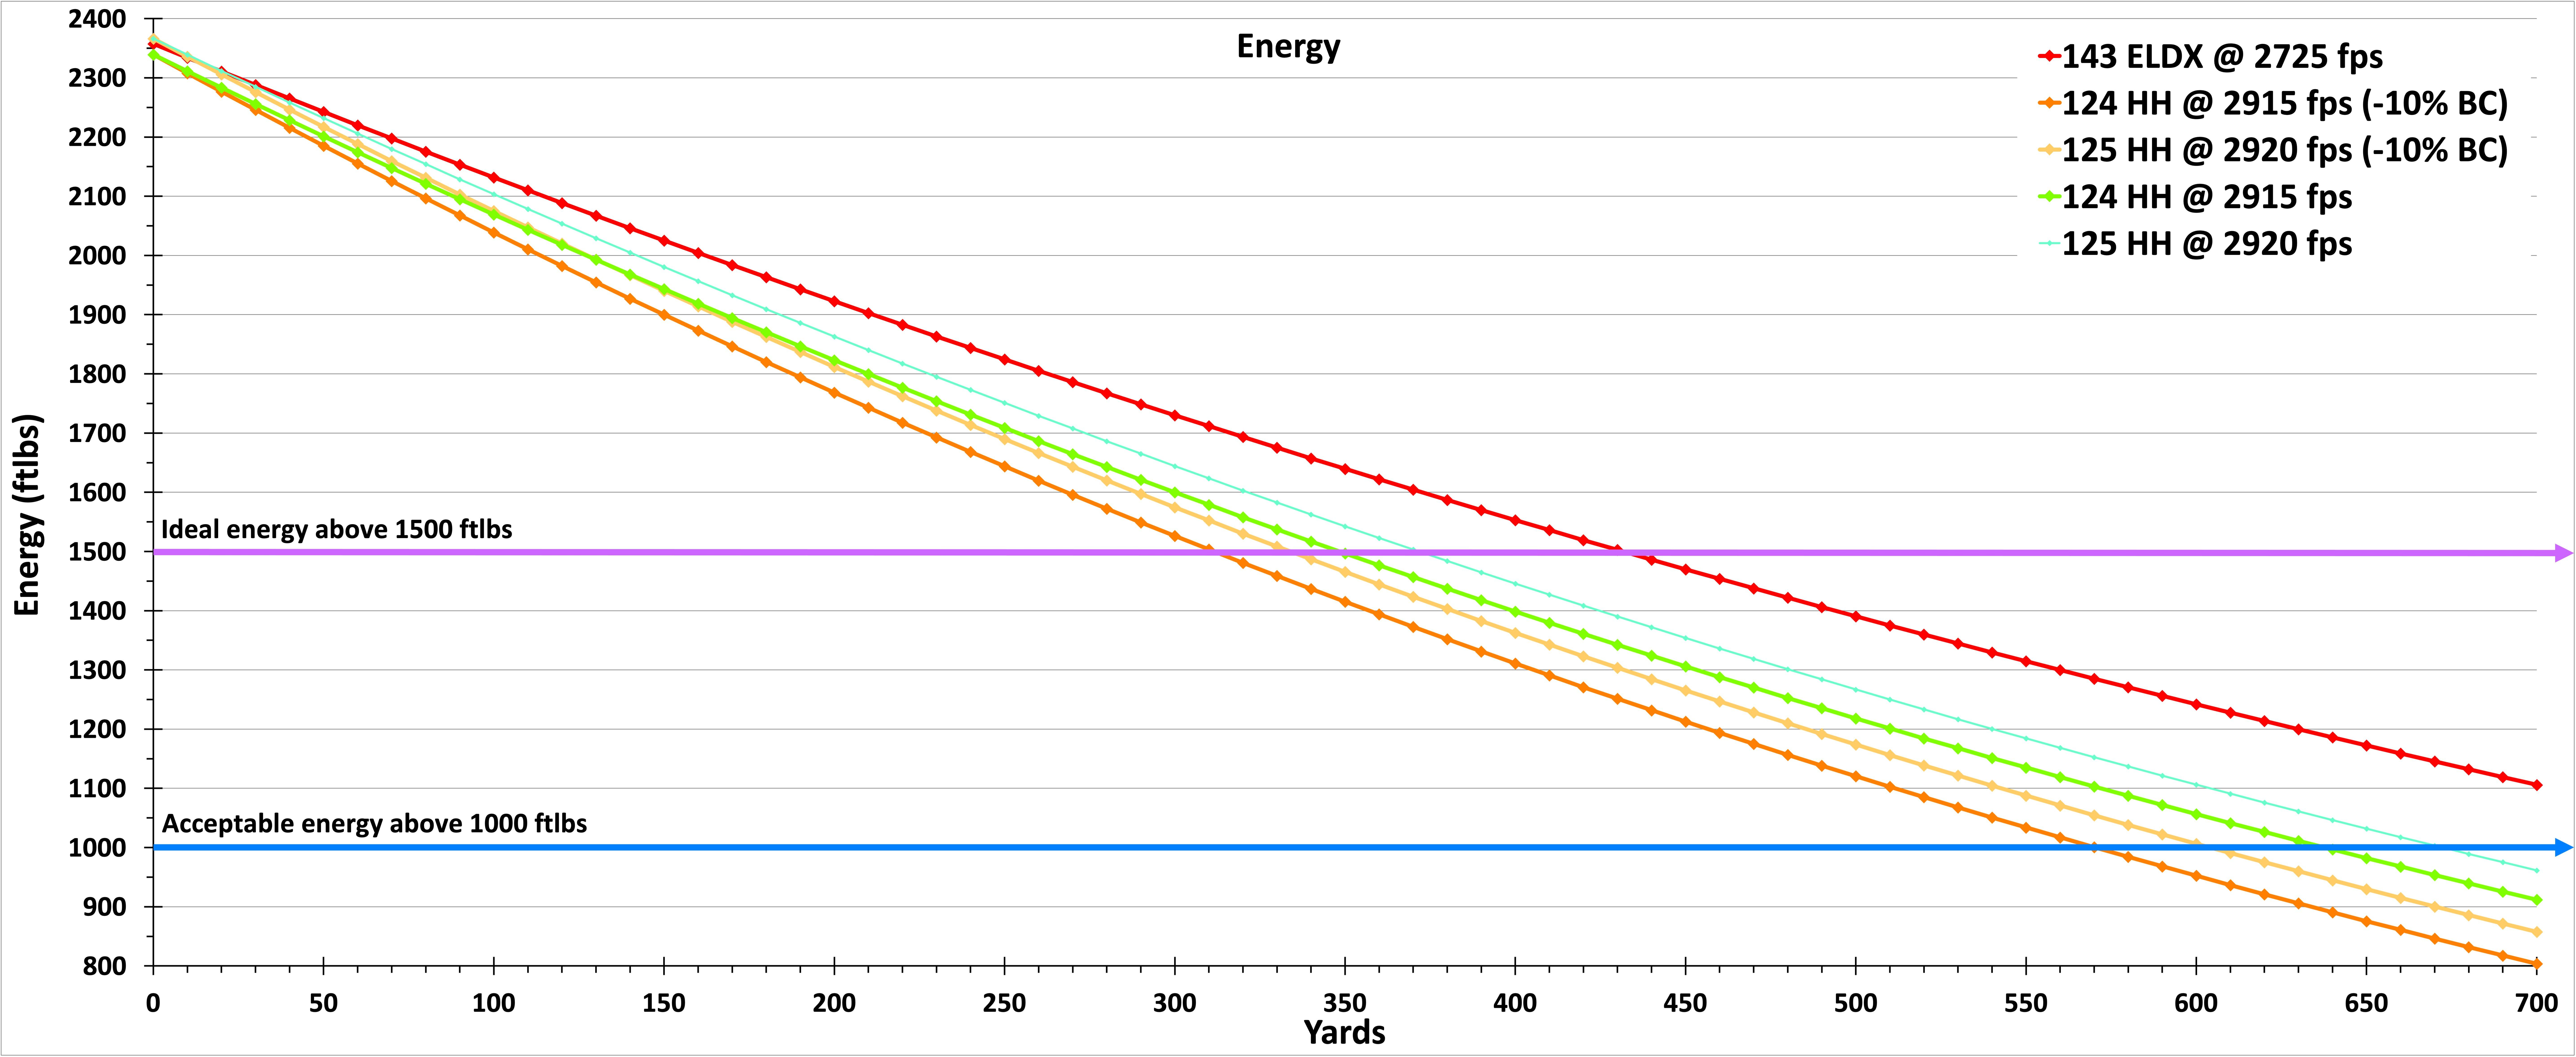 143 ELDX vs 124-124 HH Energy.jpg